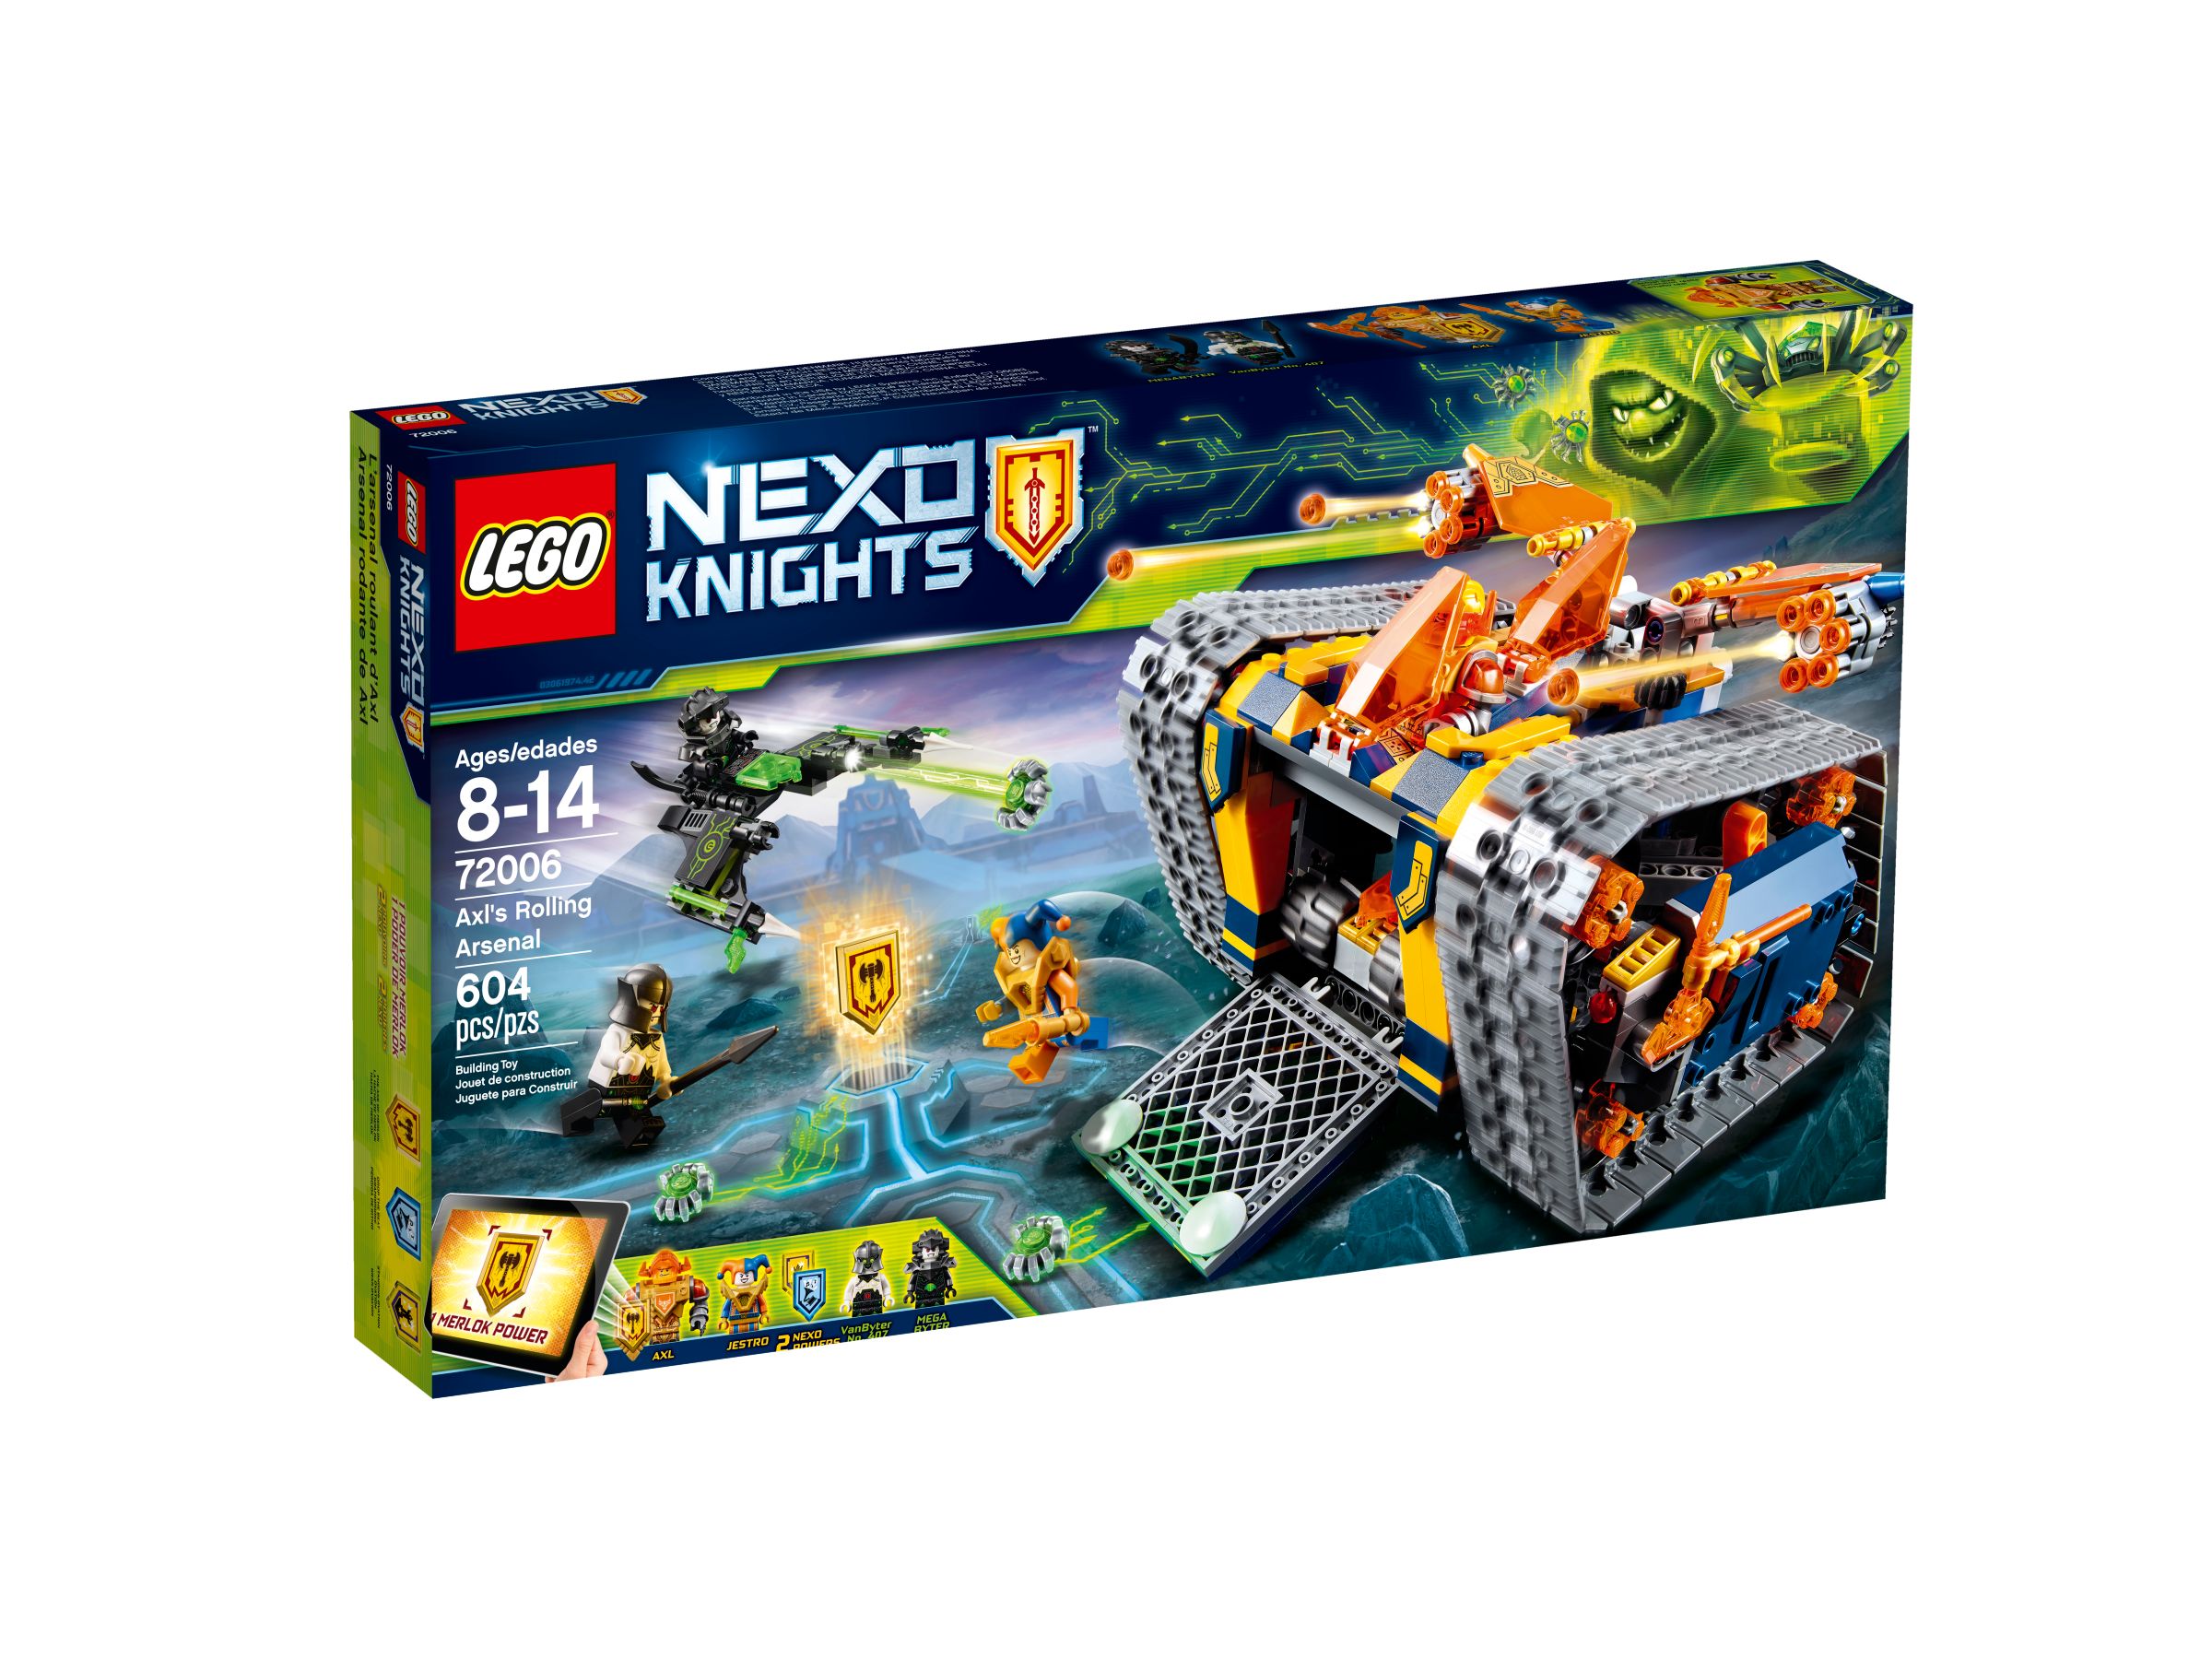 LEGO Nexo Knights 72006 Axls Donnerraupe LEGO_72006_alt1.jpg